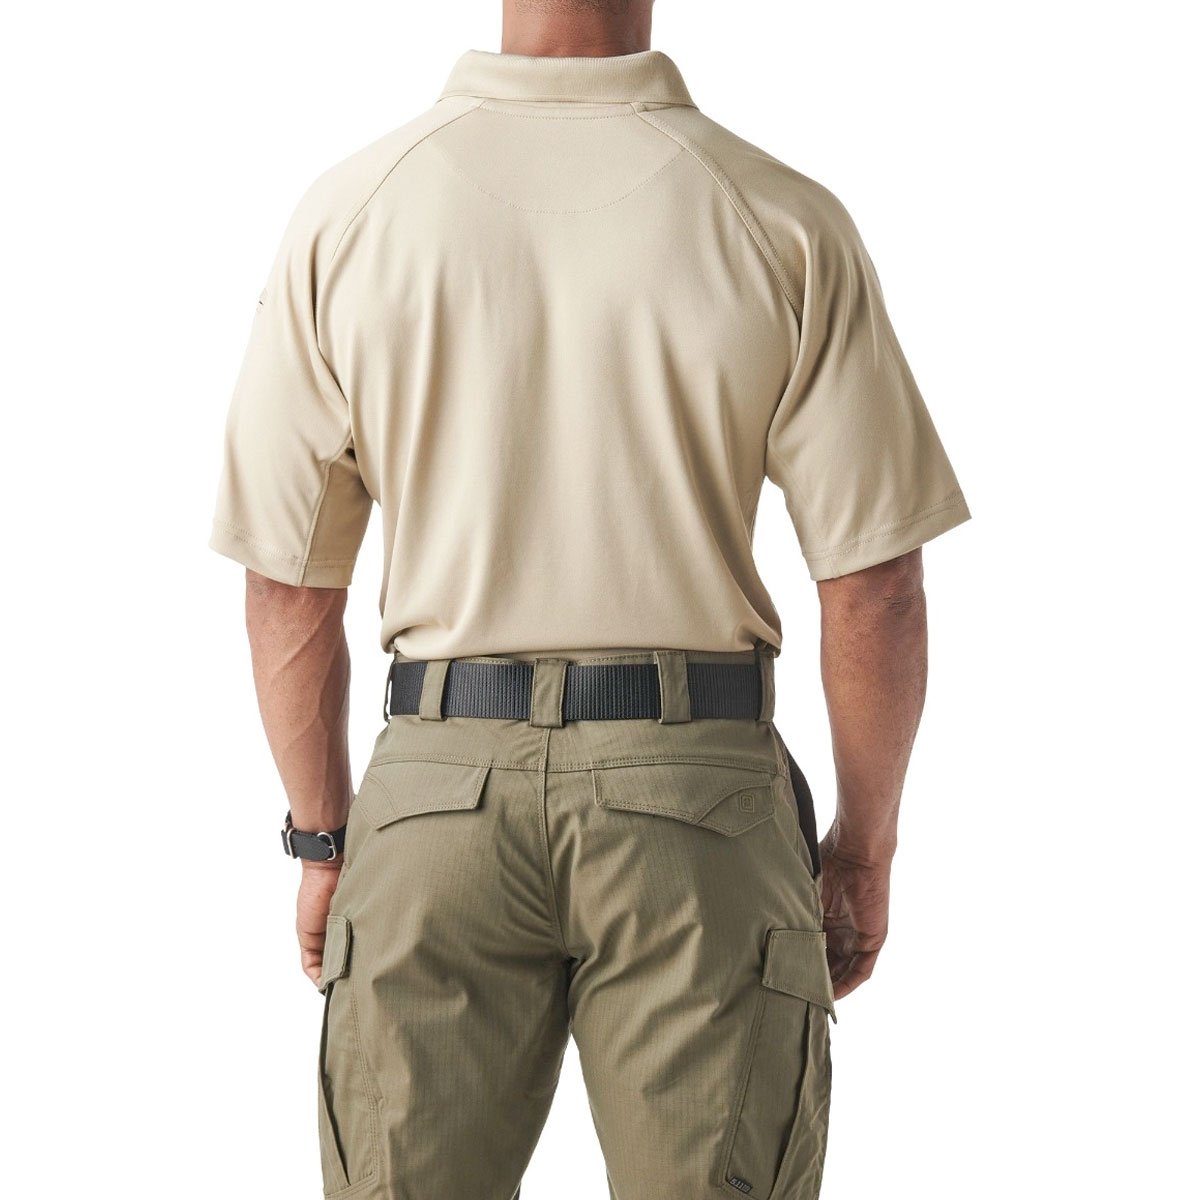 5.11 Tactical Performance Short Sleeve Polo Silver Tan Tactical Distributors Ltd New Zealand